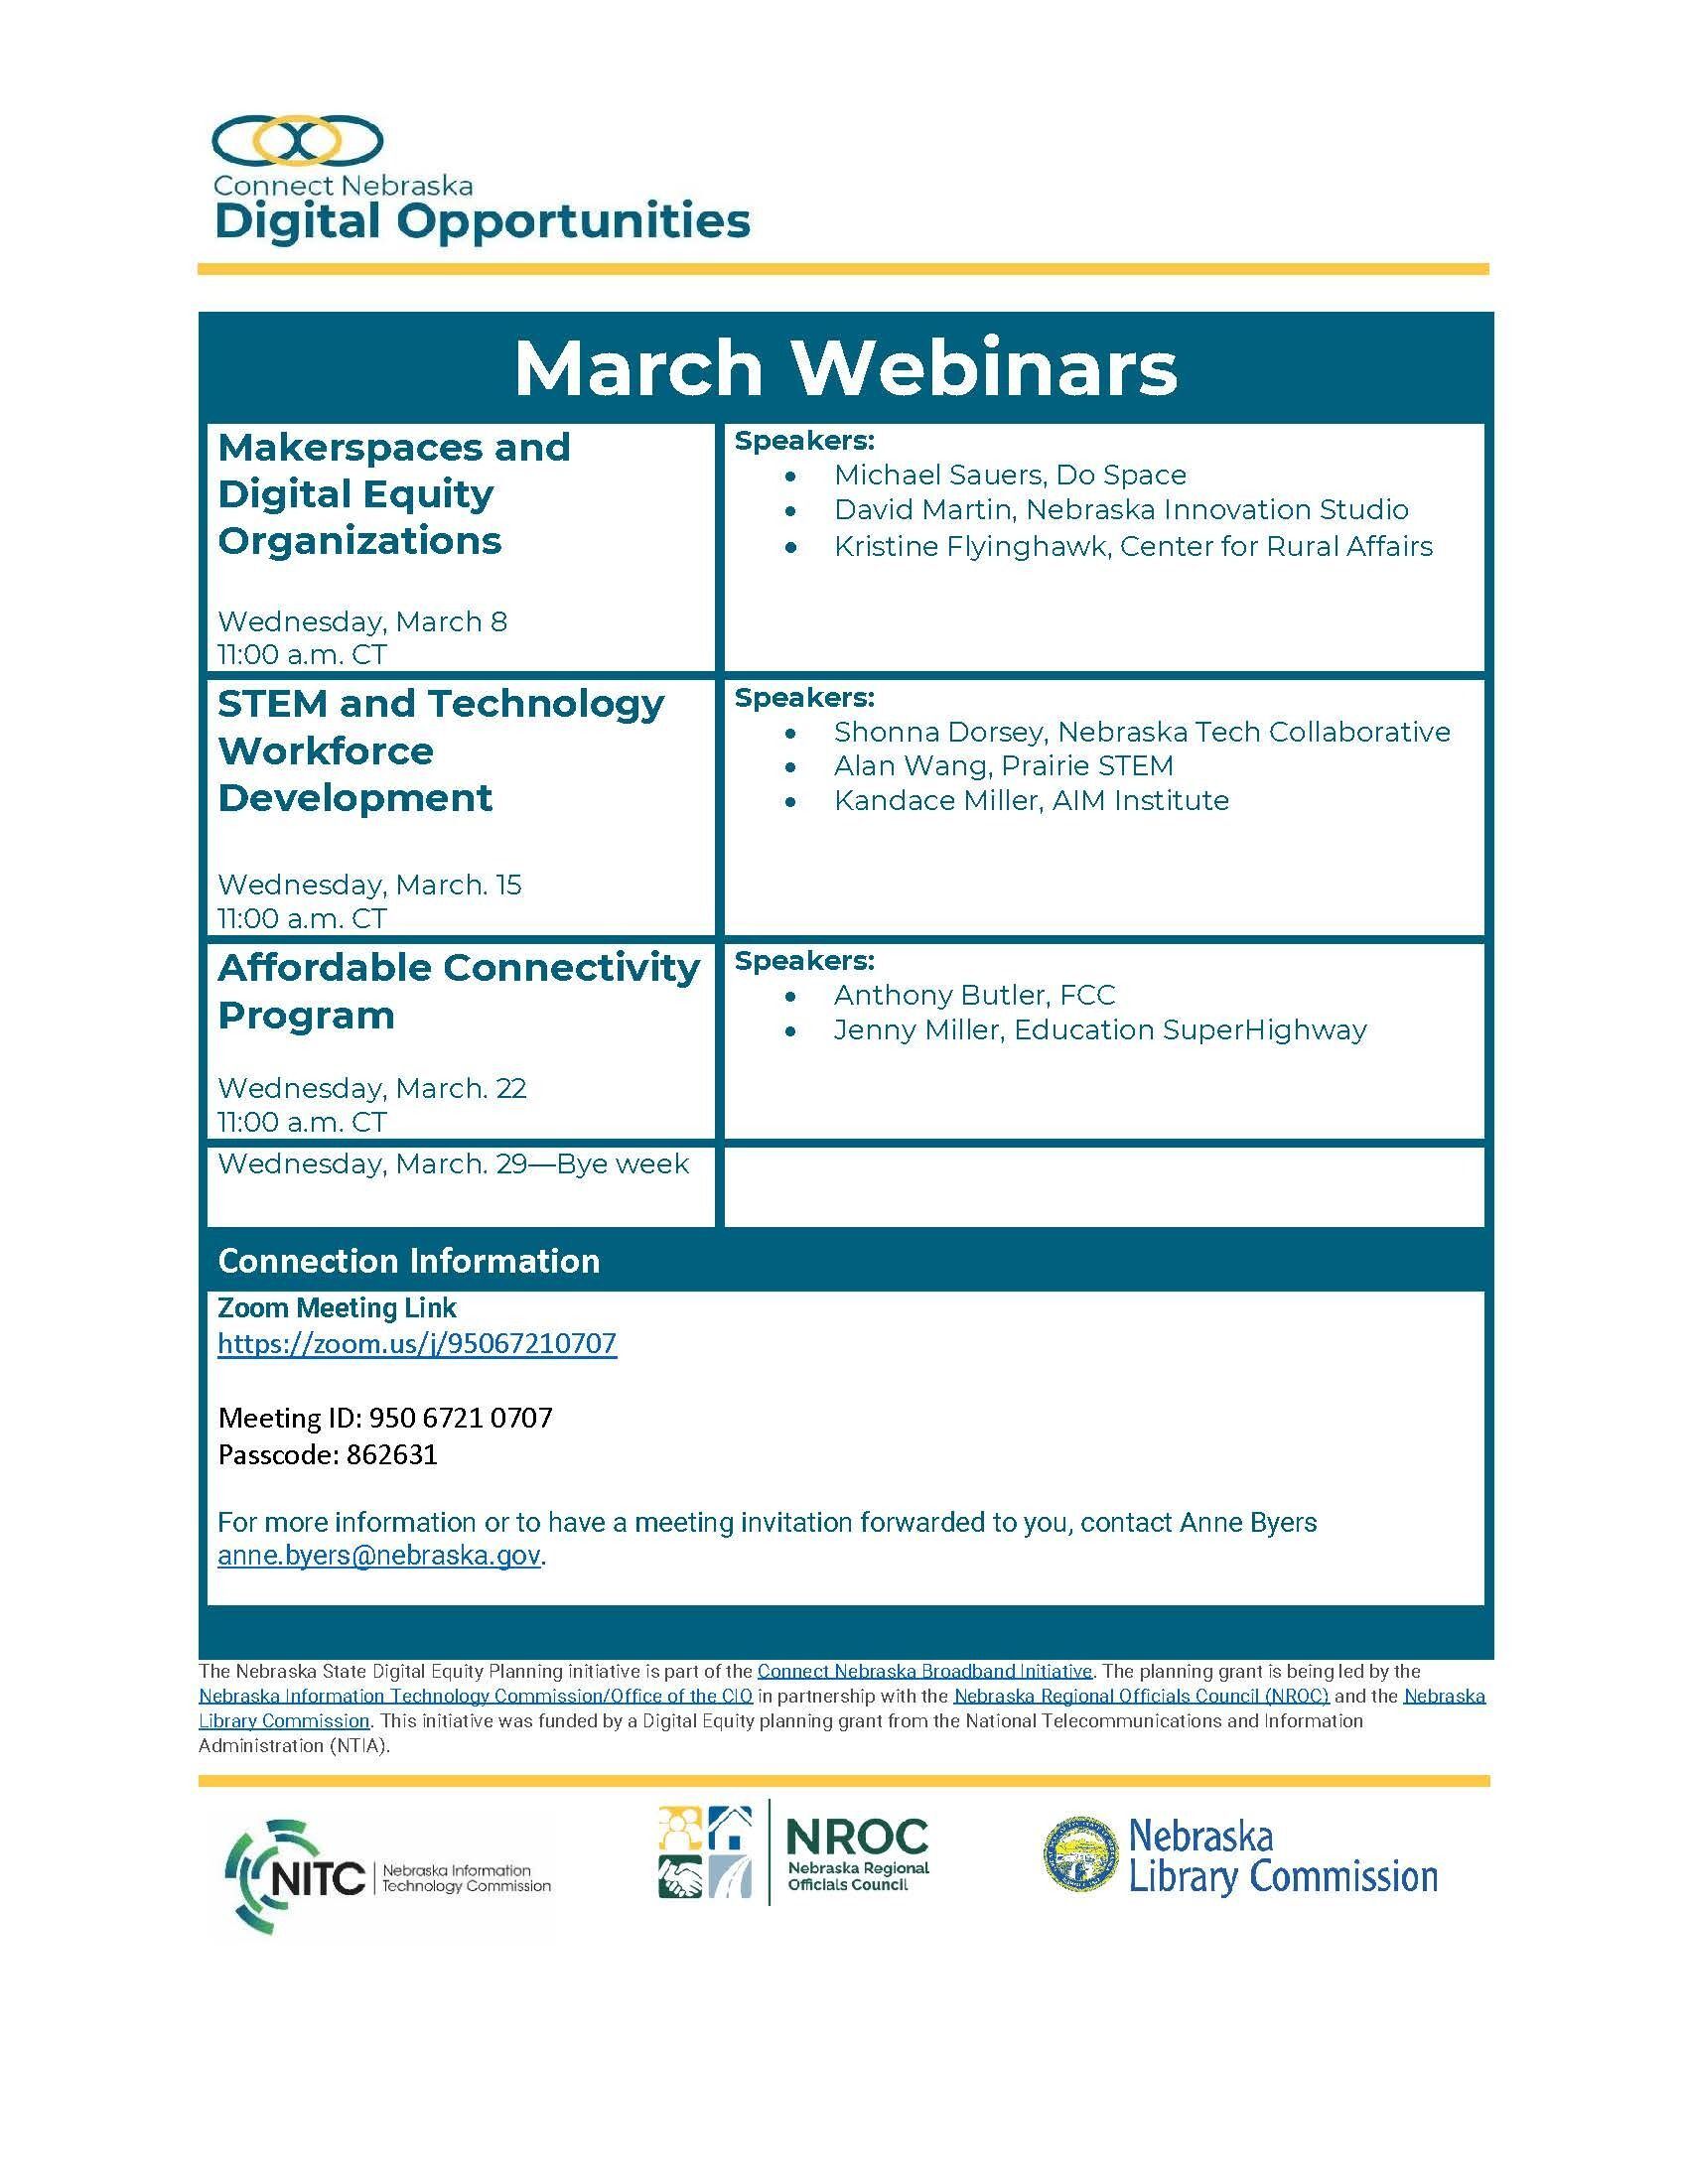 March Digital Opportunities Webinars presented by NITC